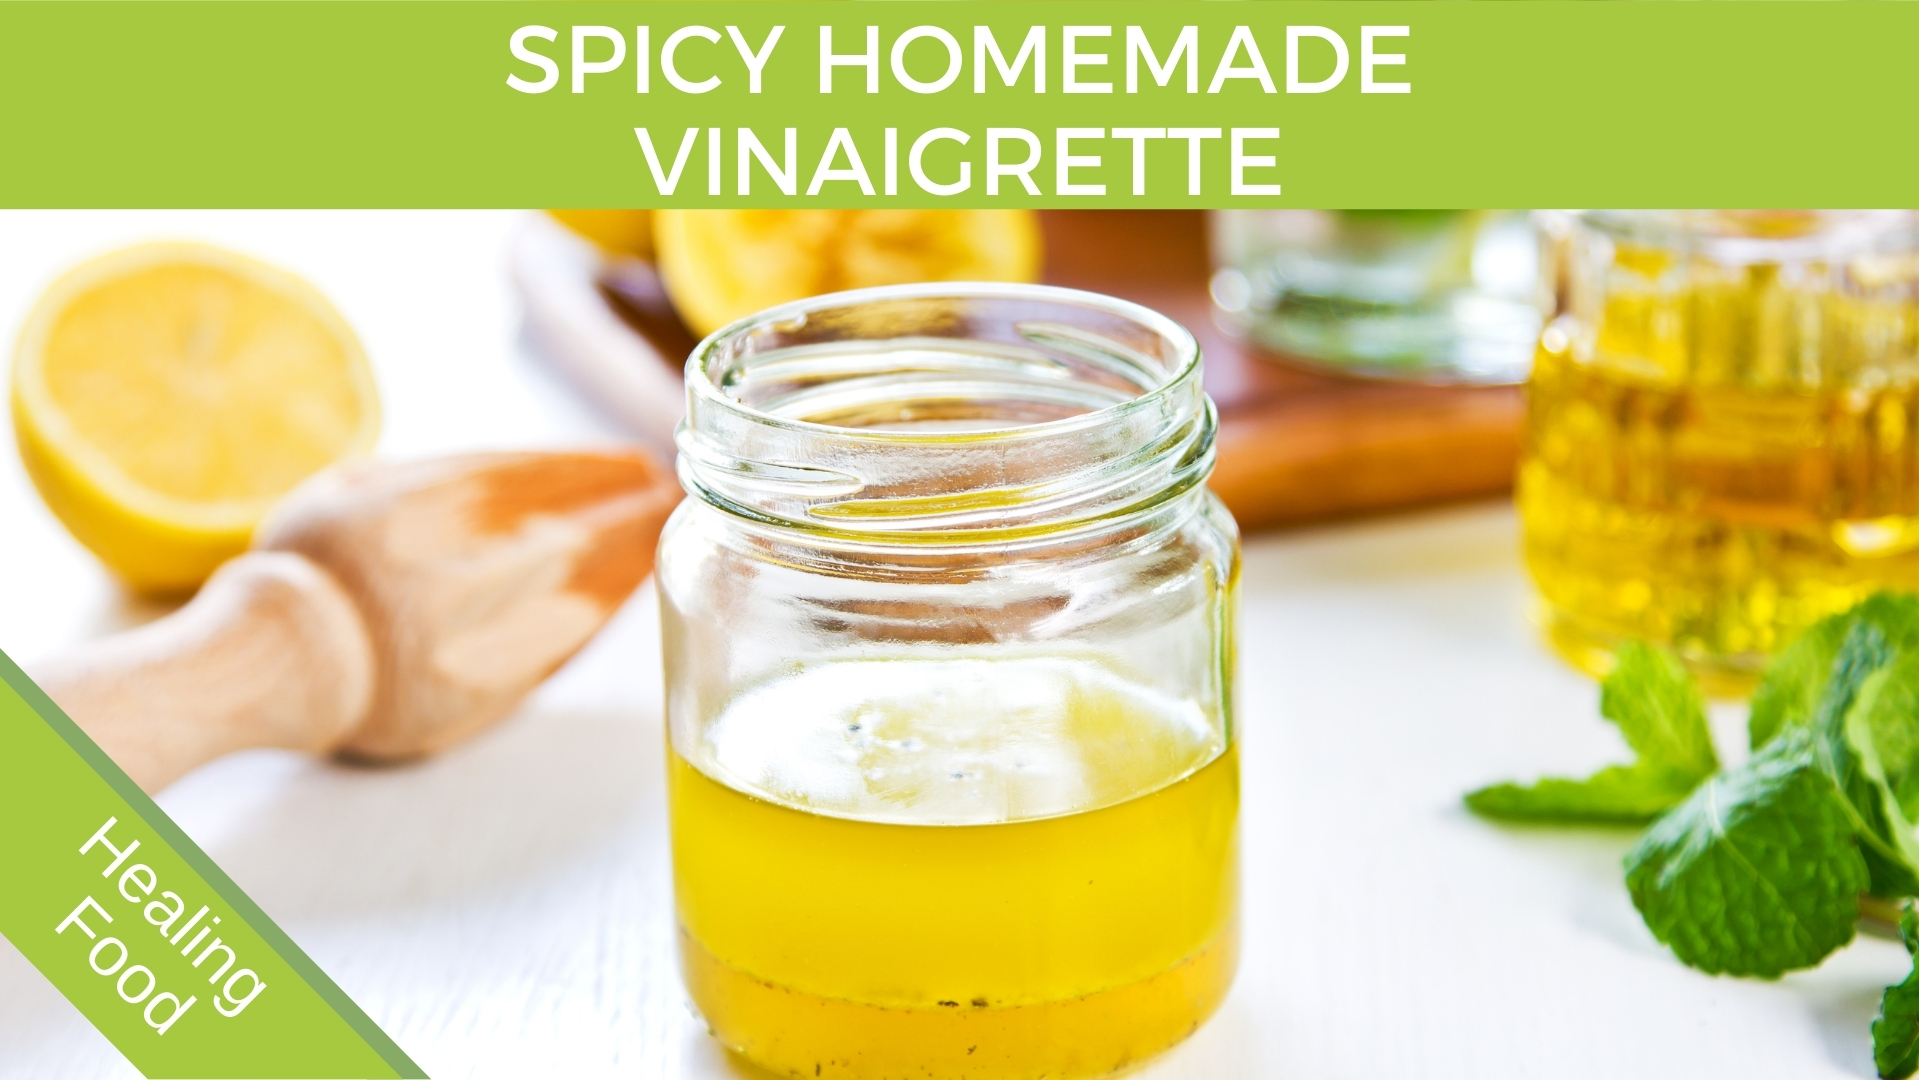 Spicy Homemade Vinaigrette in a Bottle